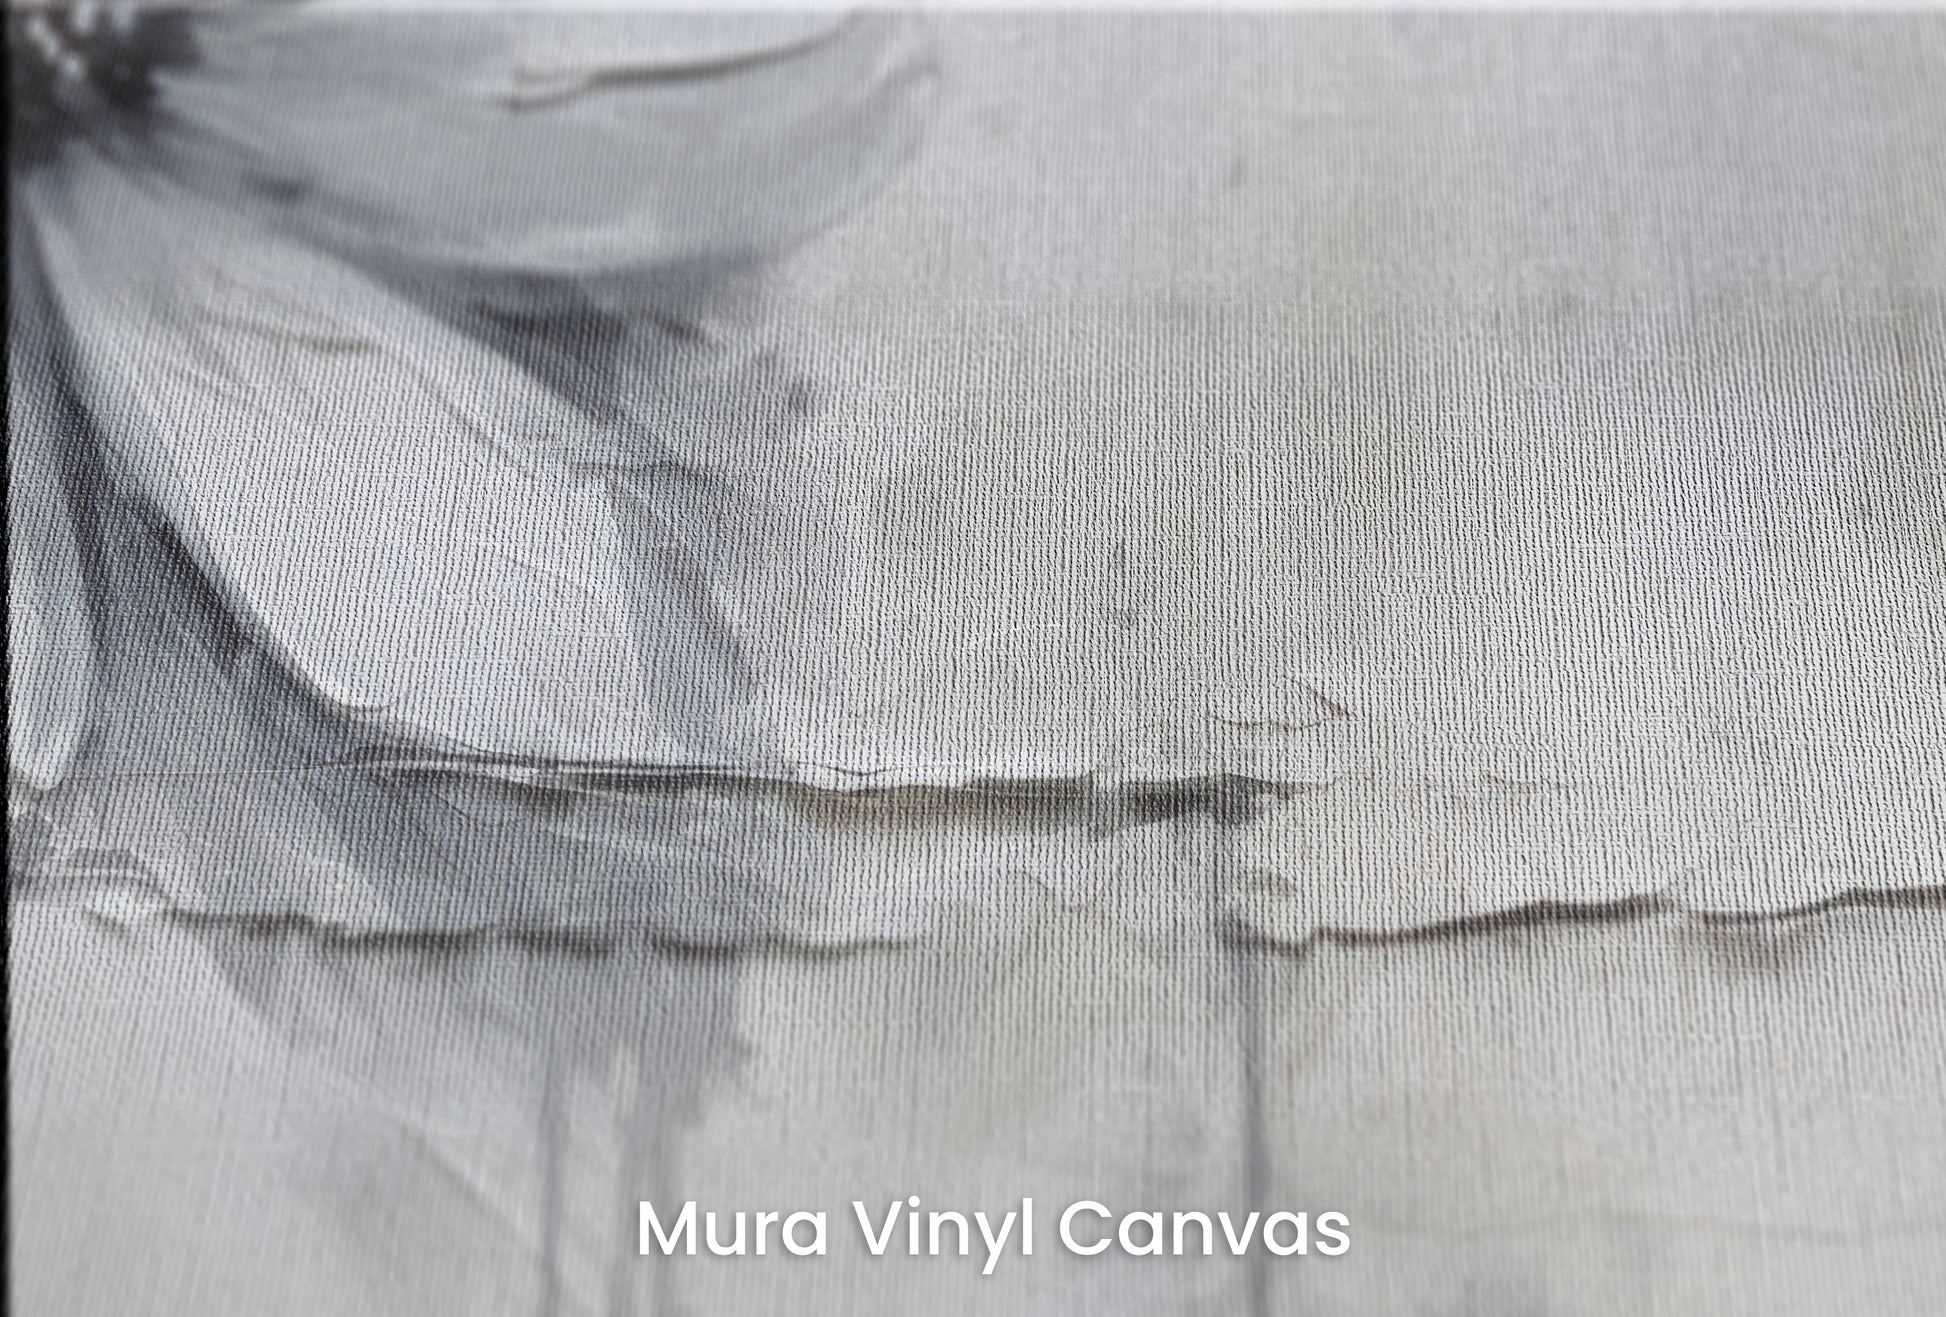 Zbliżenie na artystyczną fototapetę o nazwie SILVER BLOSSOM ABSTRACT na podłożu Mura Vinyl Canvas - faktura naturalnego płótna.